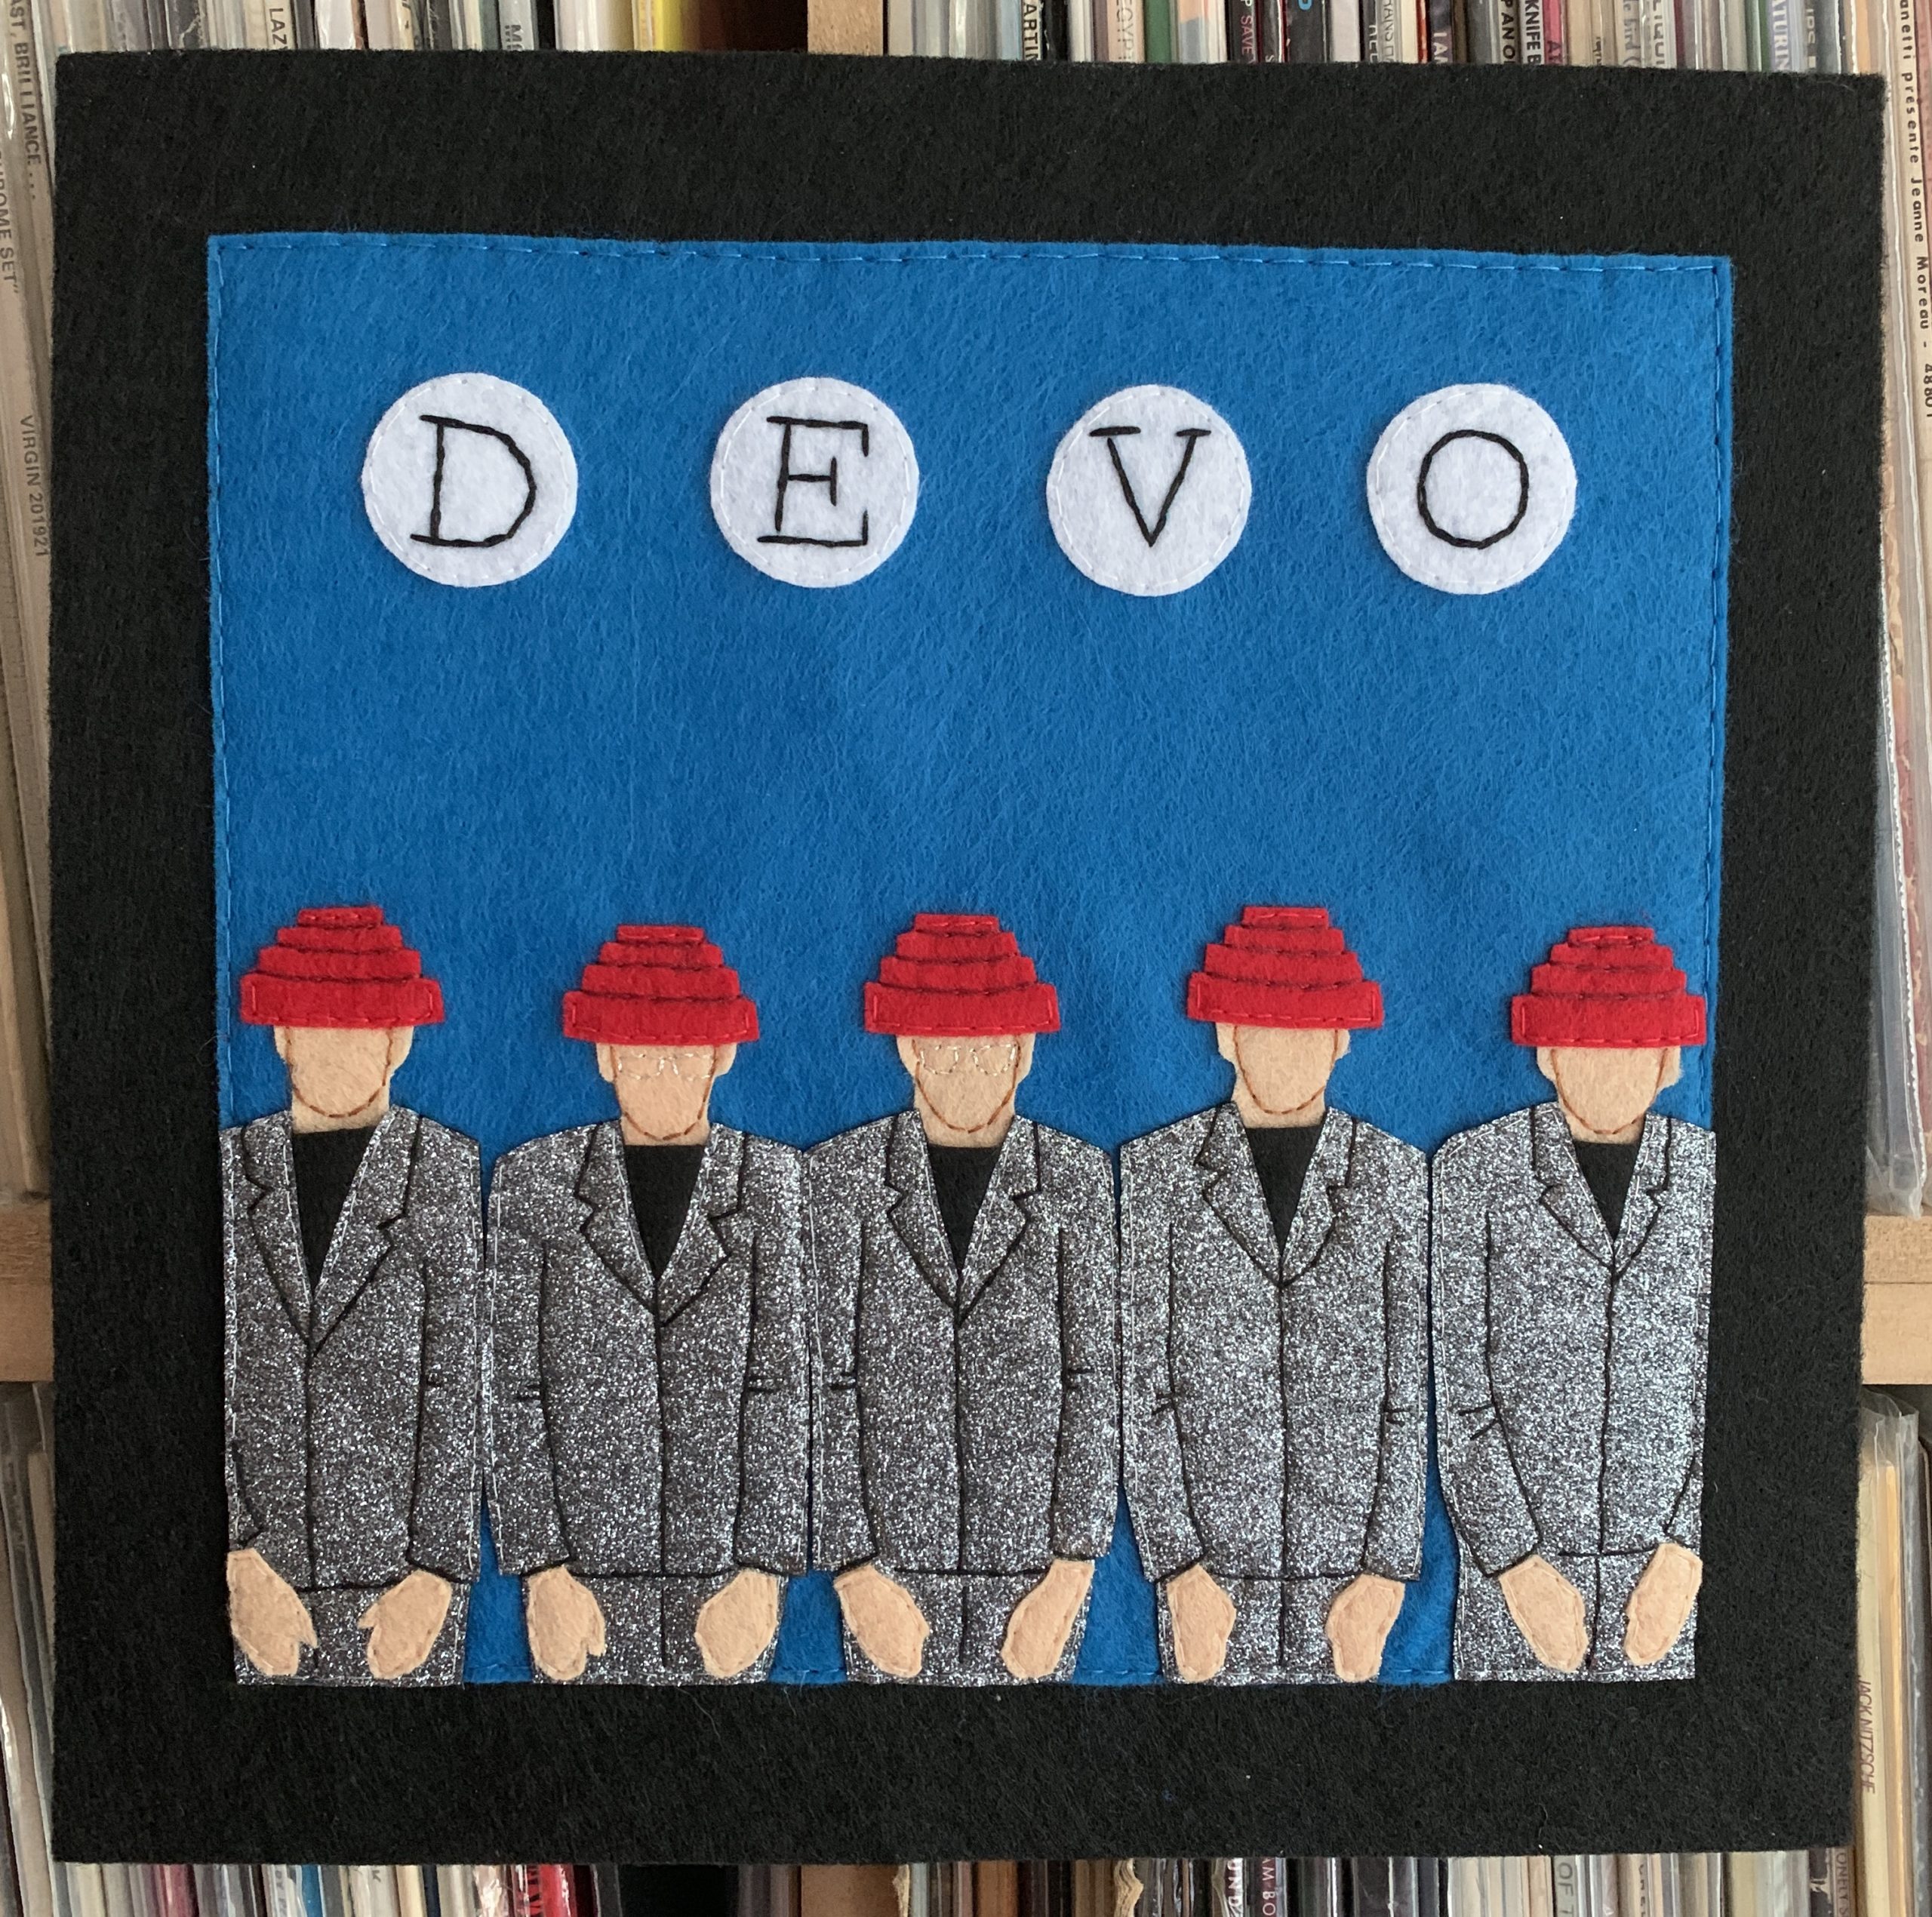 Devo – Freedom of Choice (1980)